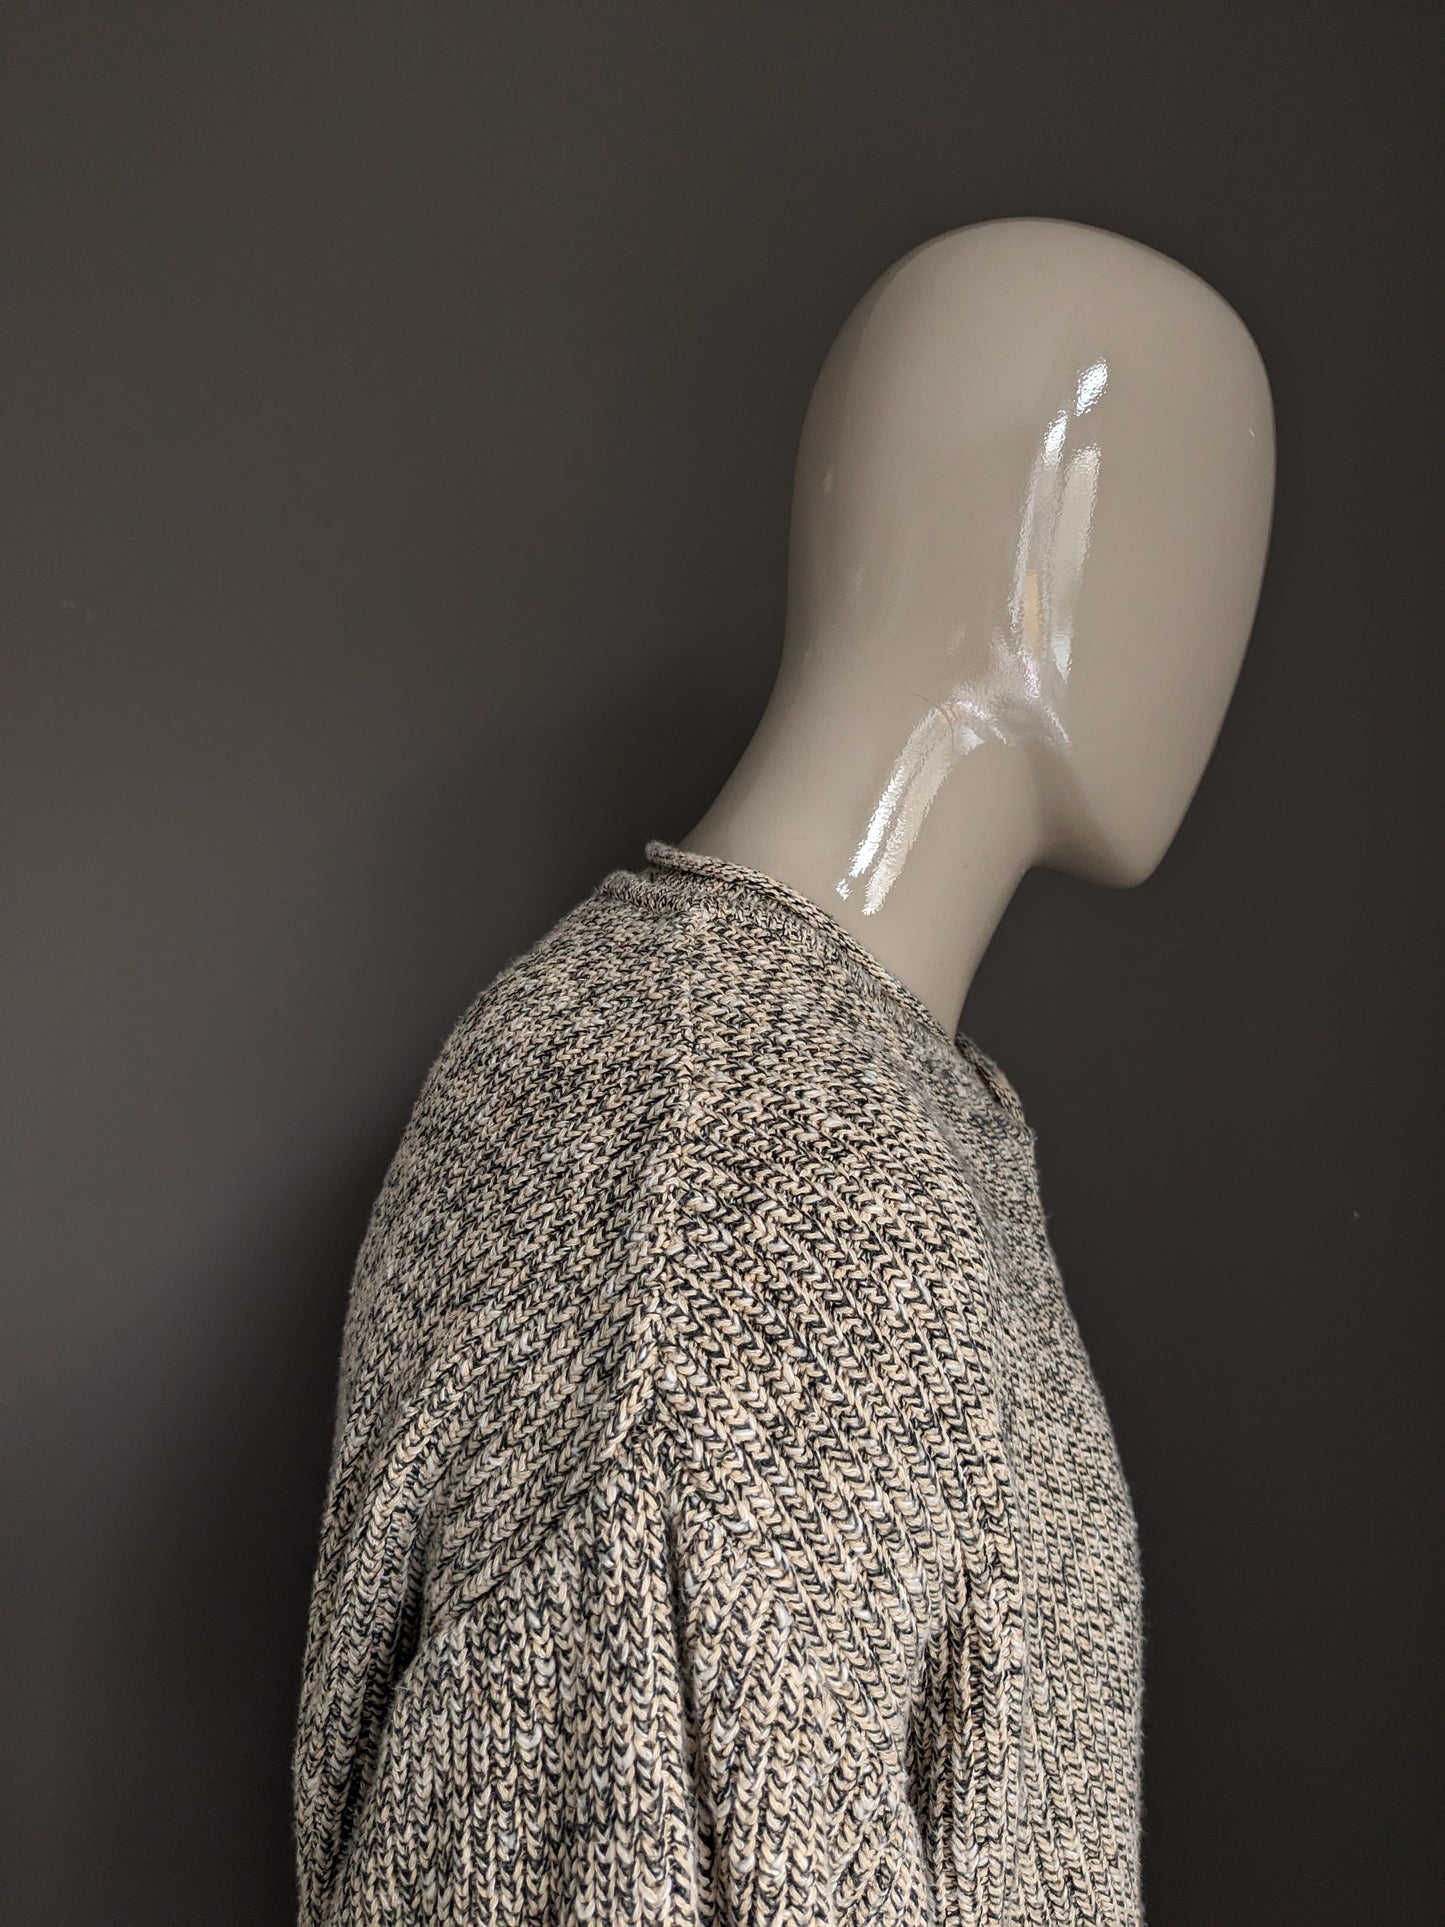 Man's fashion vintage sweater. Gray beige mixed. Size L / XL Vintage Oversized Model.